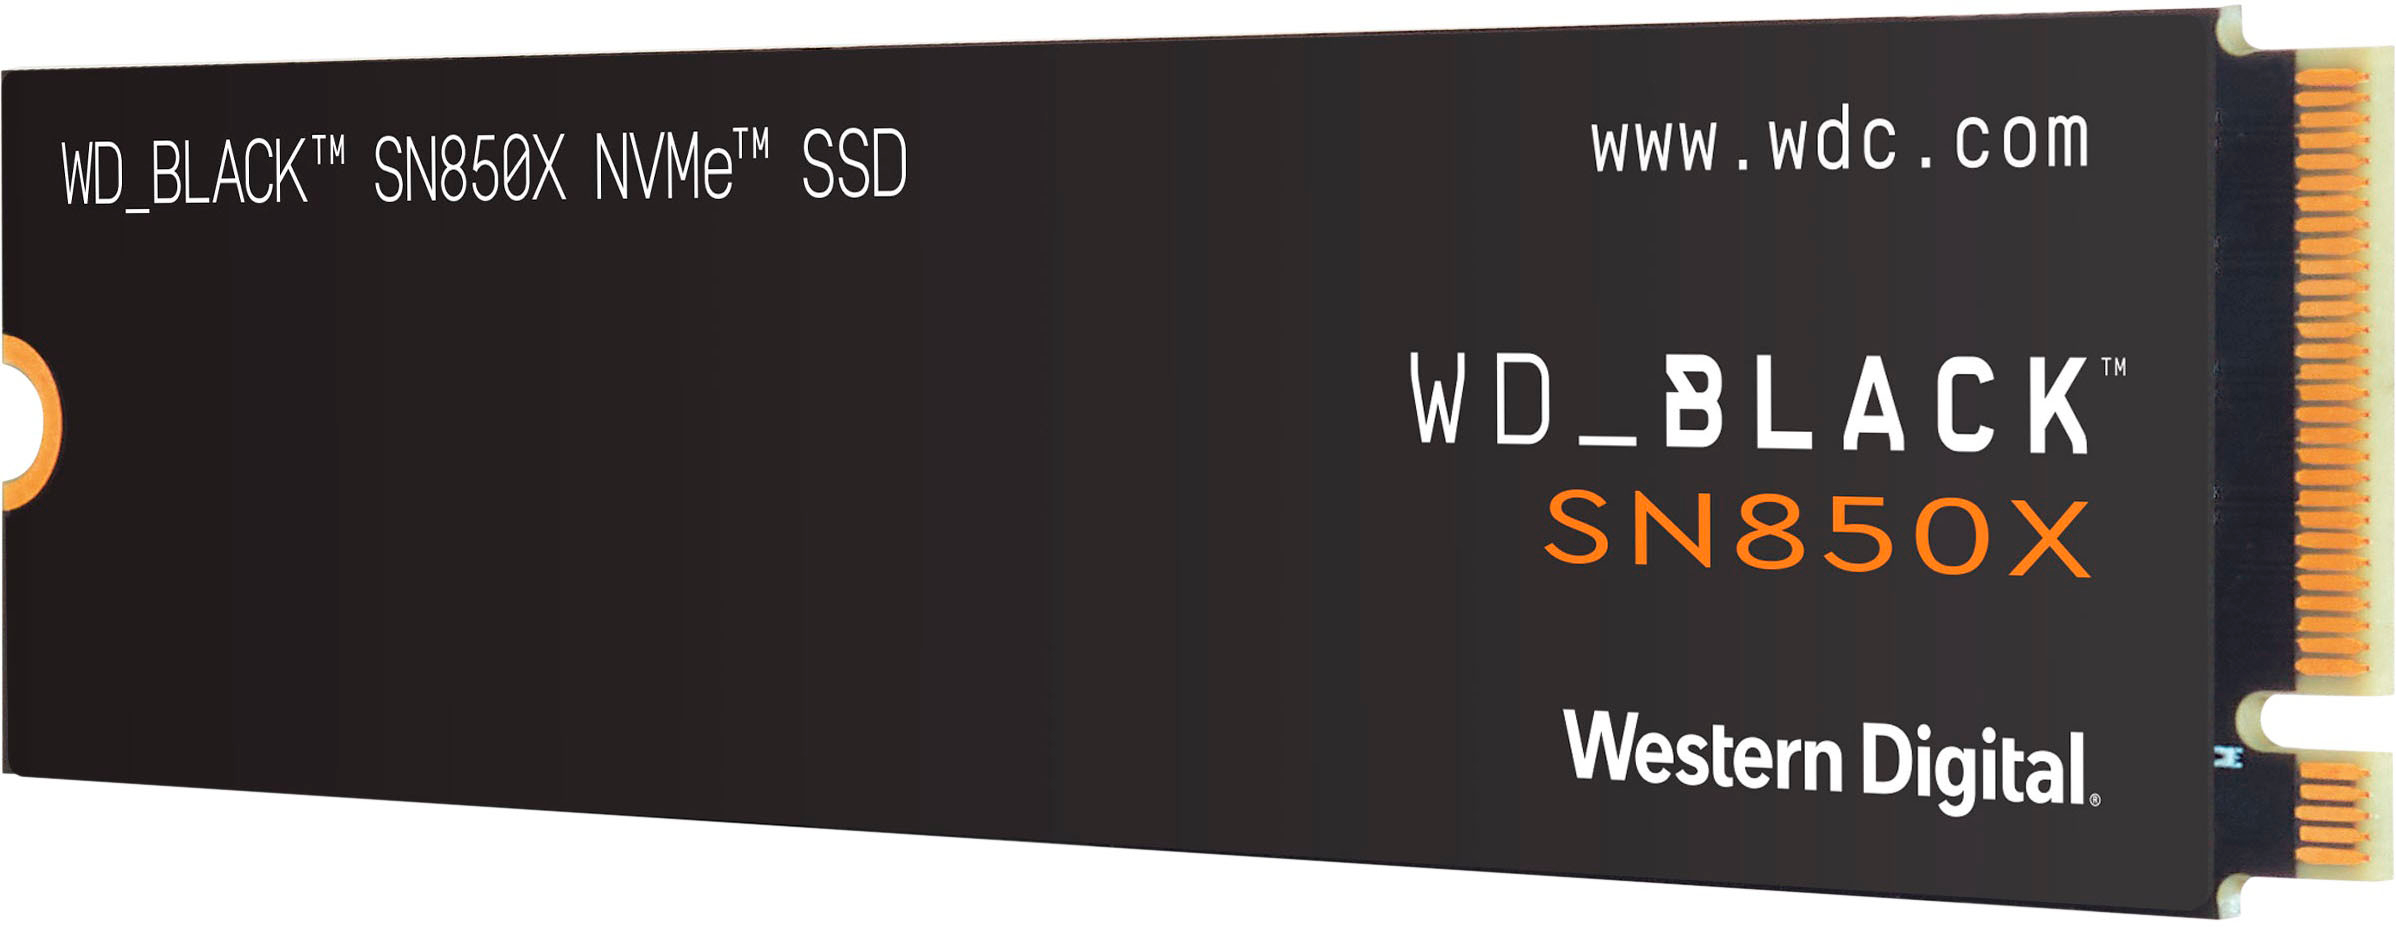 WD - BLACK SN850X 2TB Internal SSD PCIe Gen 4 x4 NVMe $169.99 at Best Buy